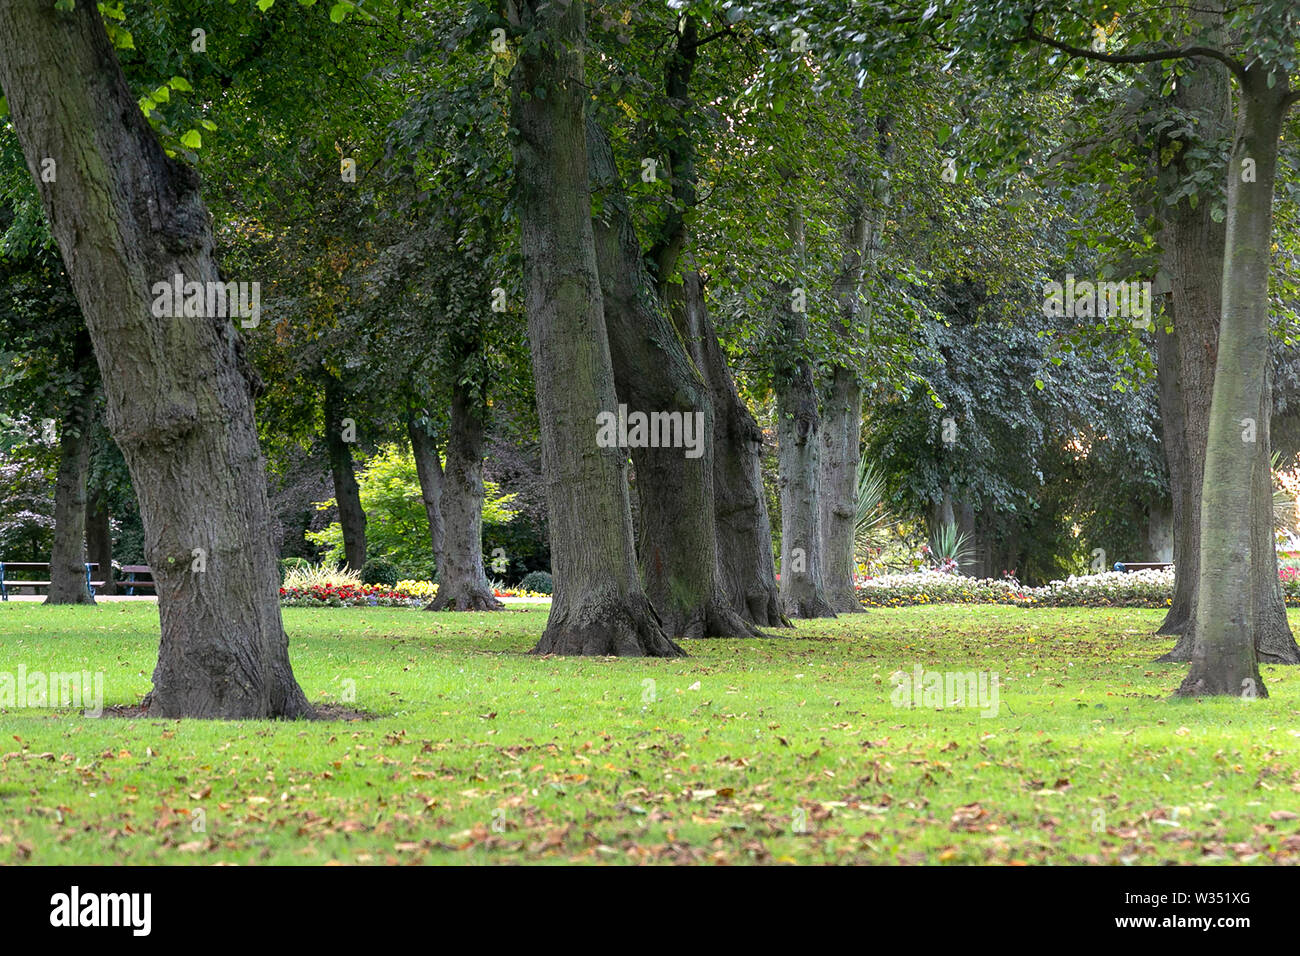 Ropner Park, Stockton on Tees. UK Stock Photo